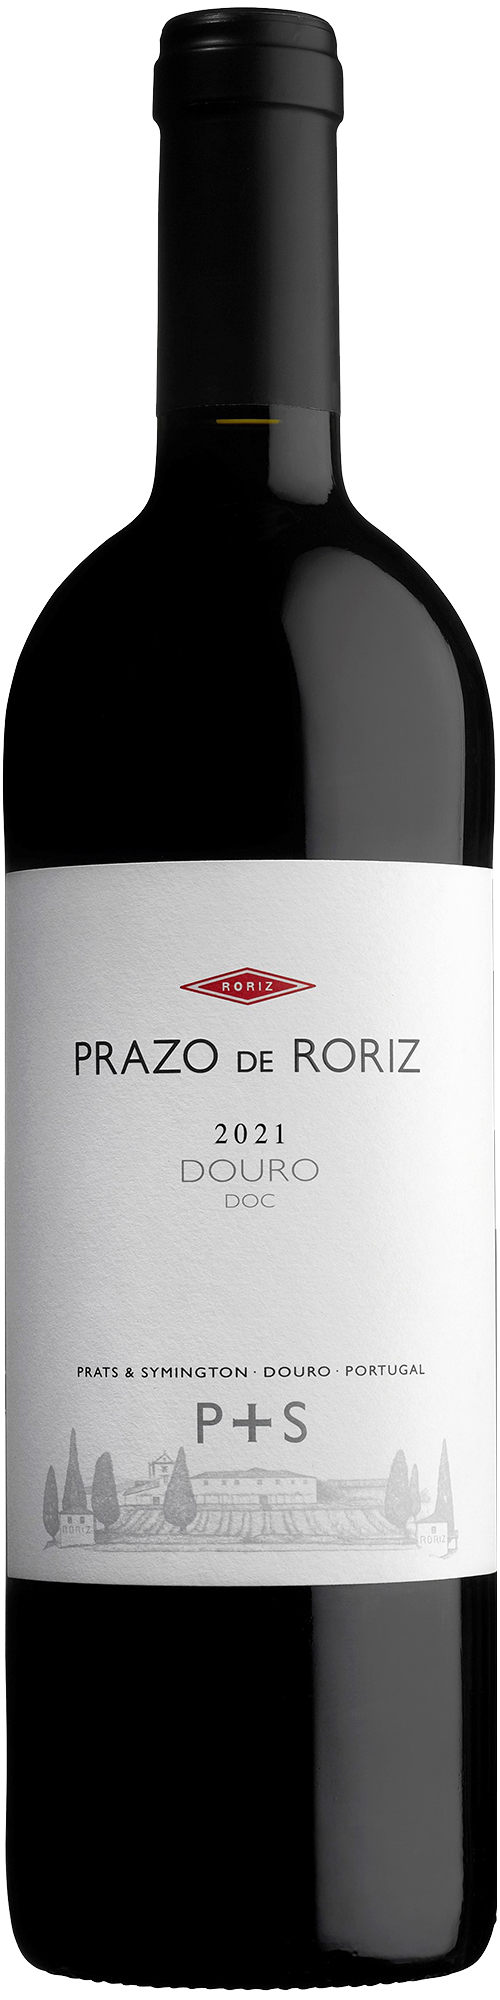 Product Image for P&S PRAZO DE RORIZ DOURO RED 2021